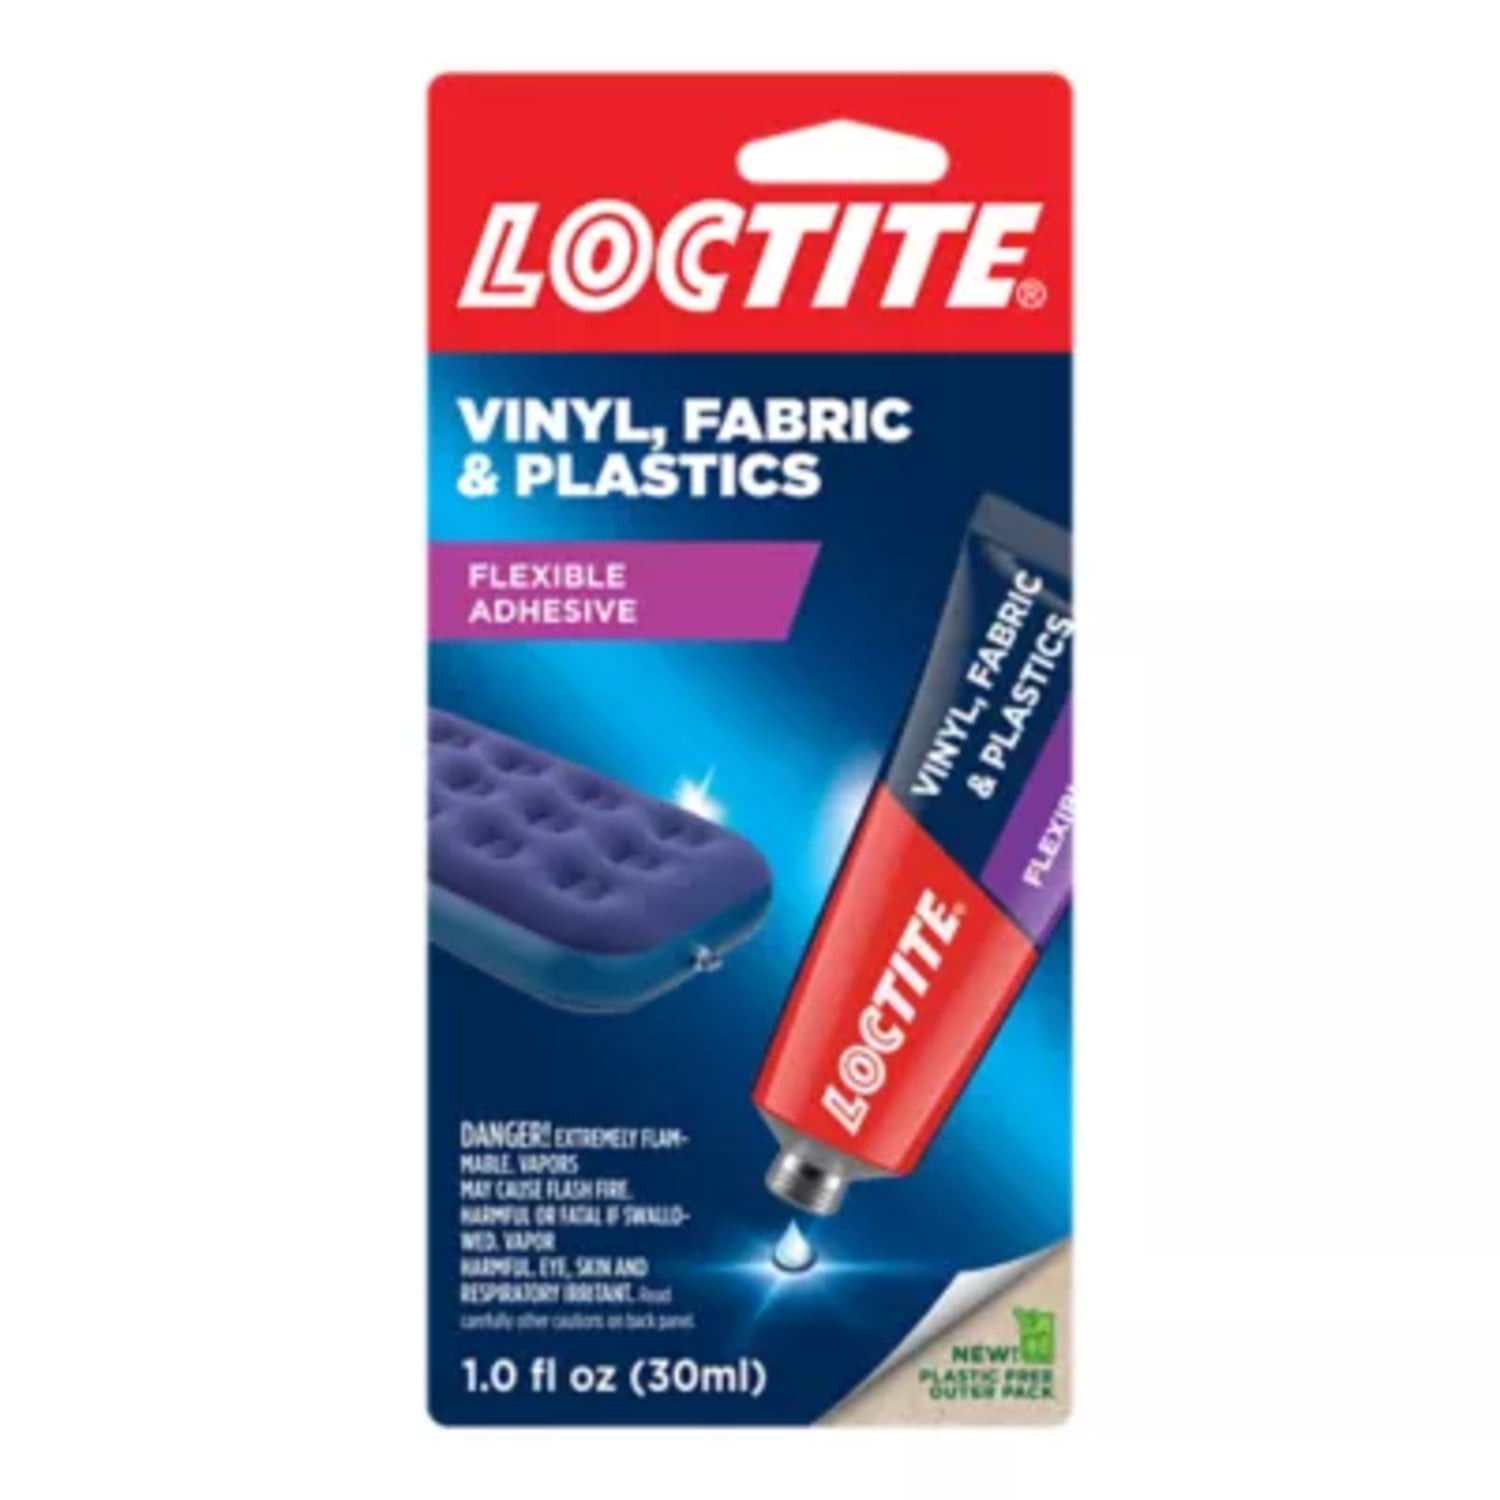 Loctite Vinyl Fabric & Plastic Repair Flexible Adhesive, 1, Clear 1 fl oz Tube